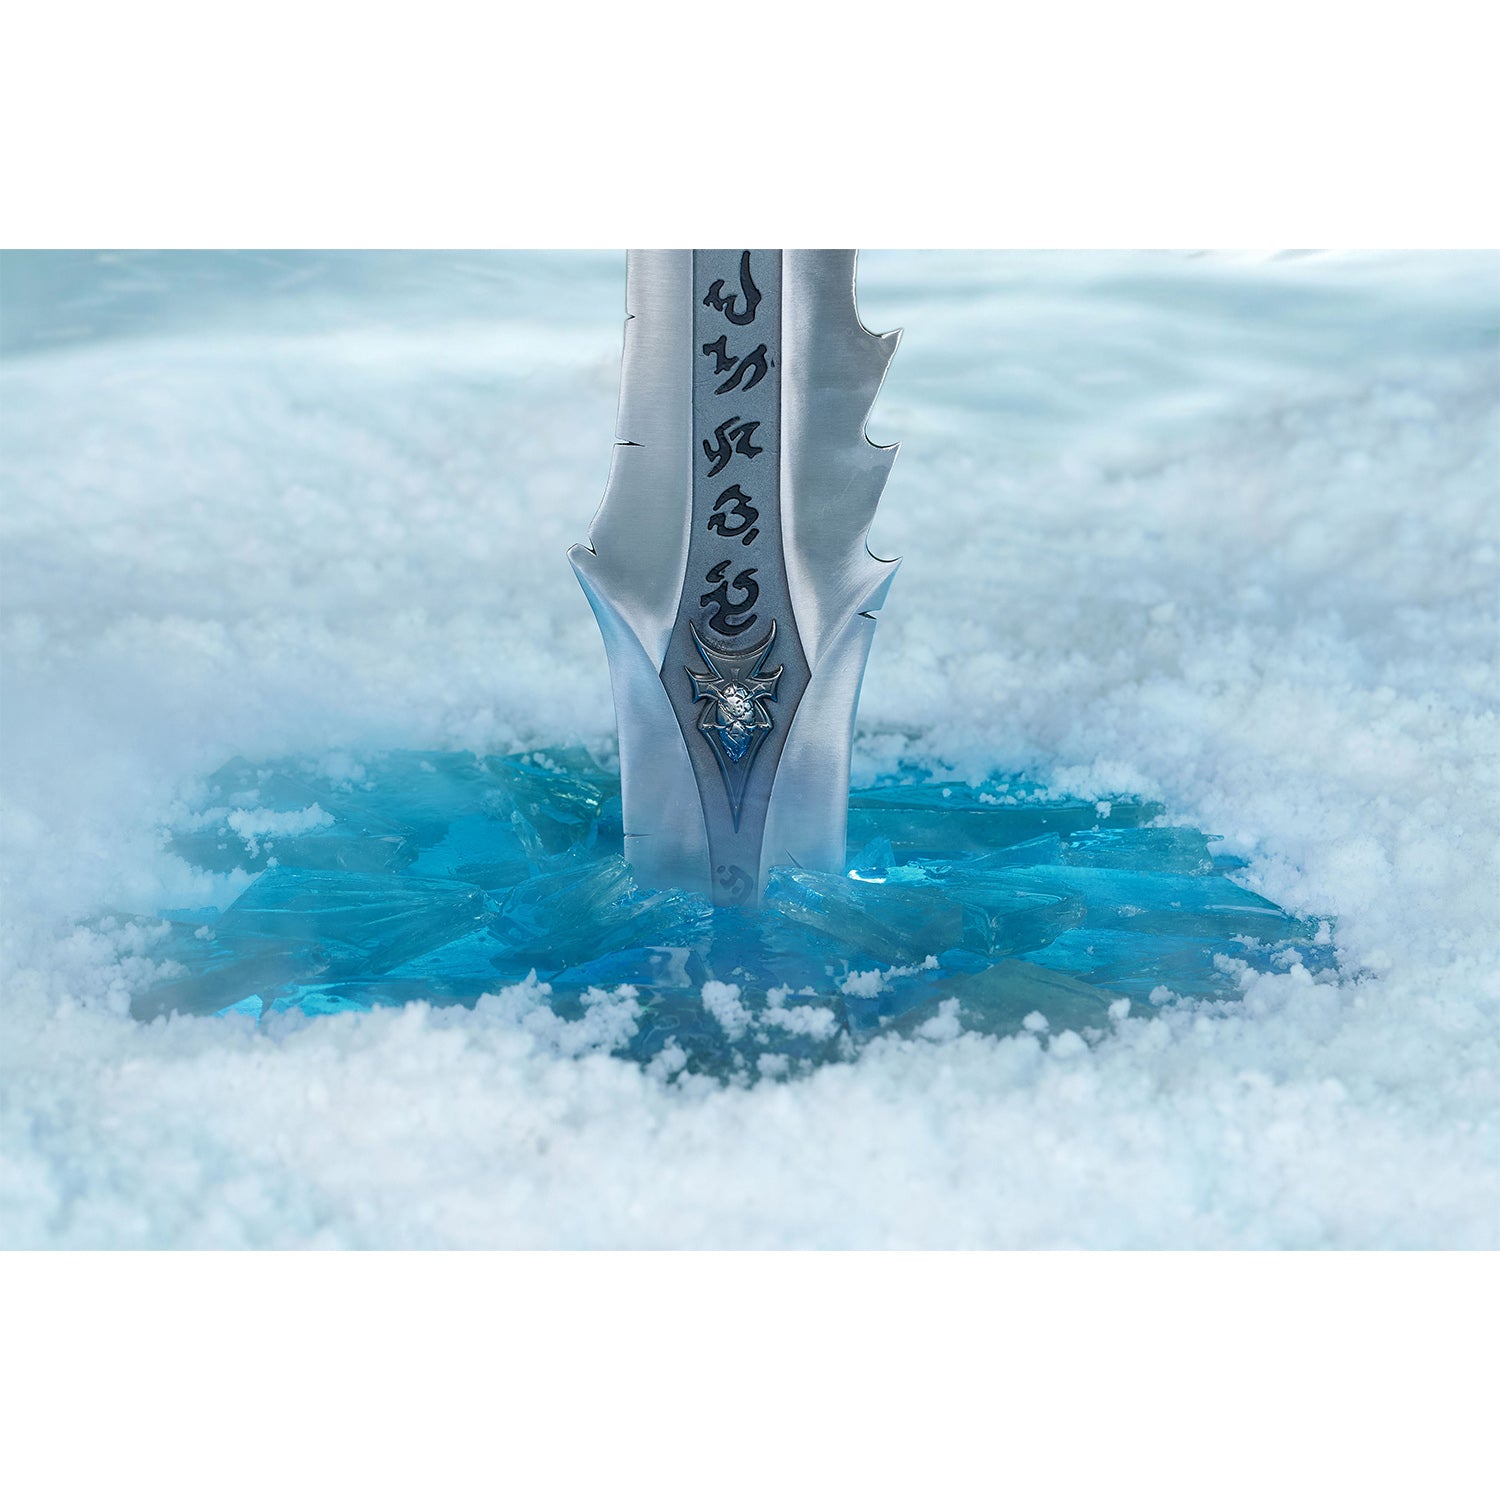 World of Warcraft Frostmourne Sword Ice Pedestal only $600